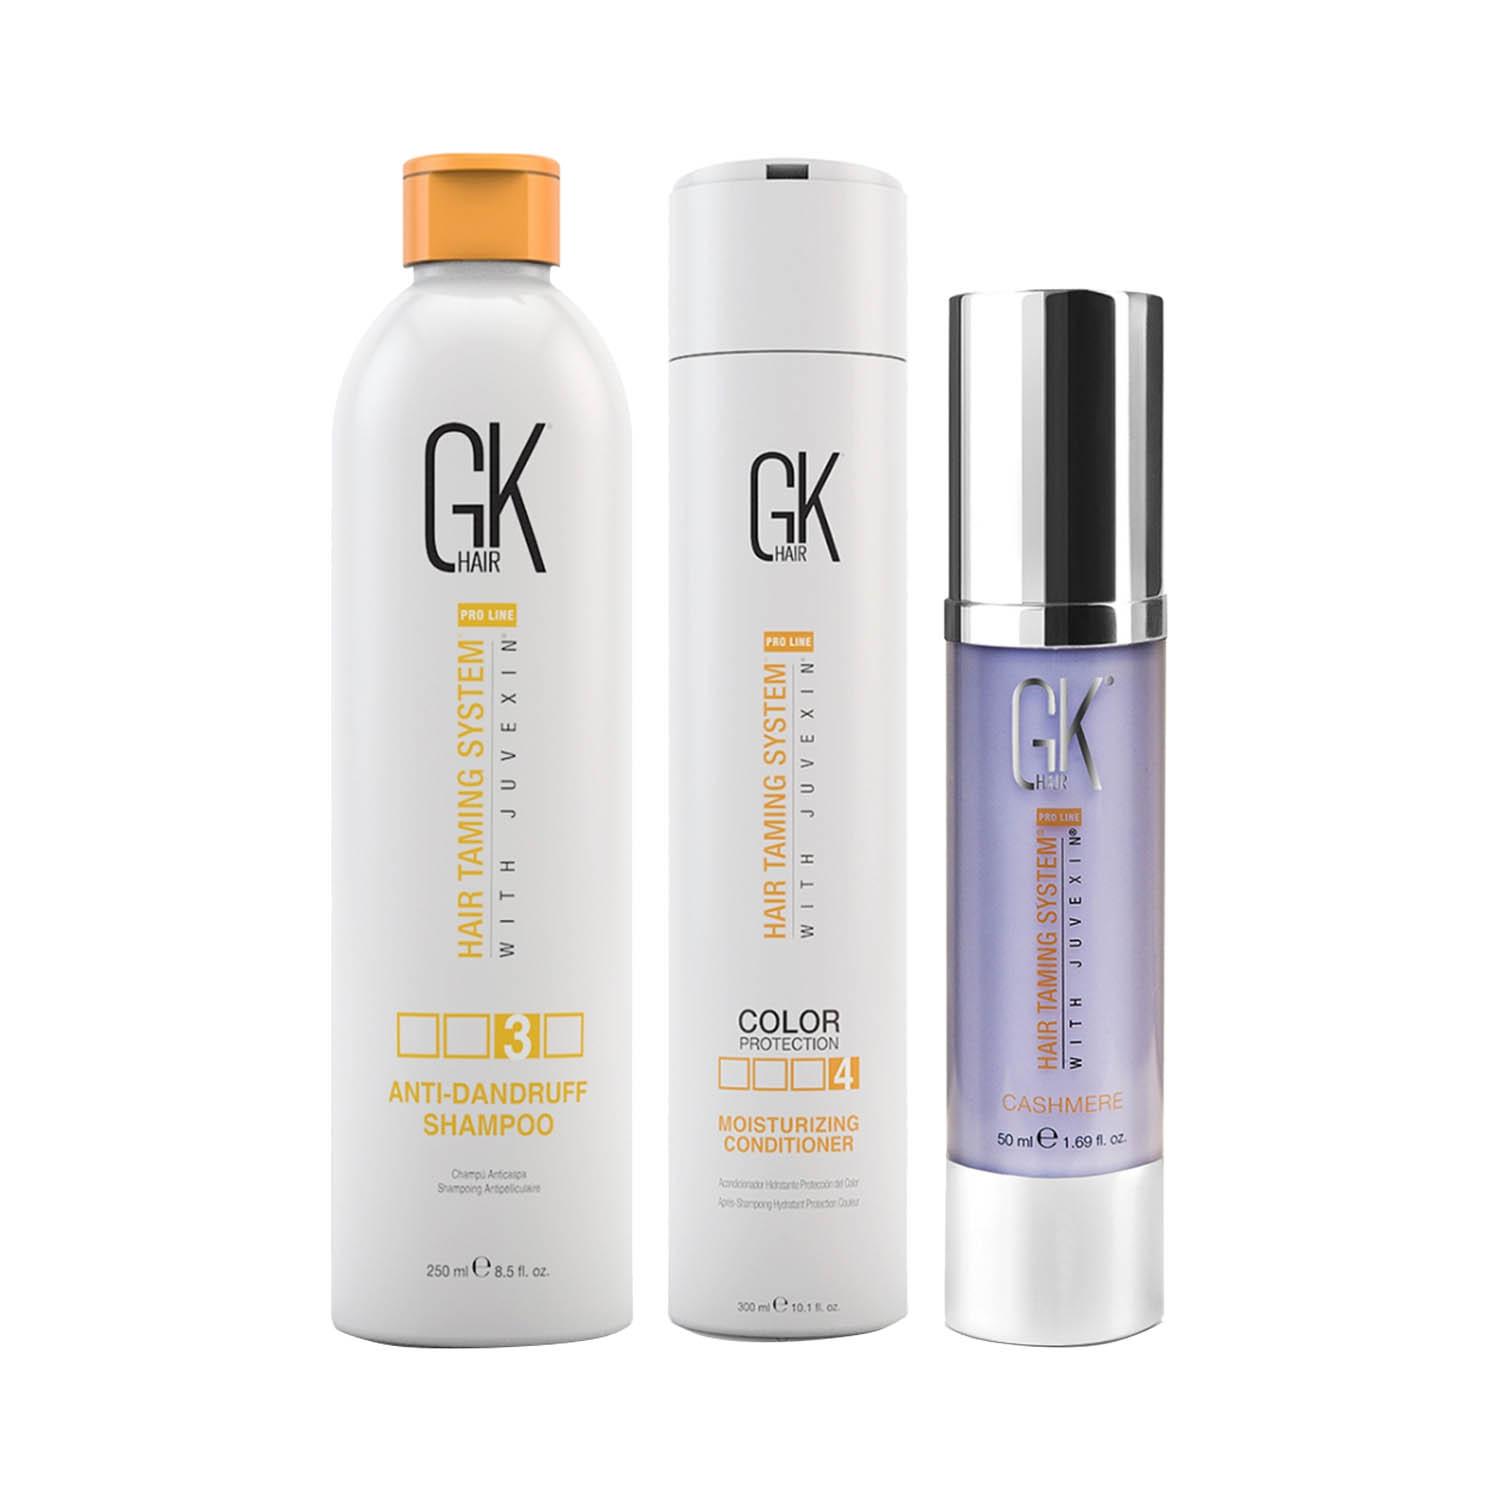 GK Hair | GK Hair Anti Dandruff Shampoo 250ml with Moisturizing Shampoo300ml and Cashmere 50ml